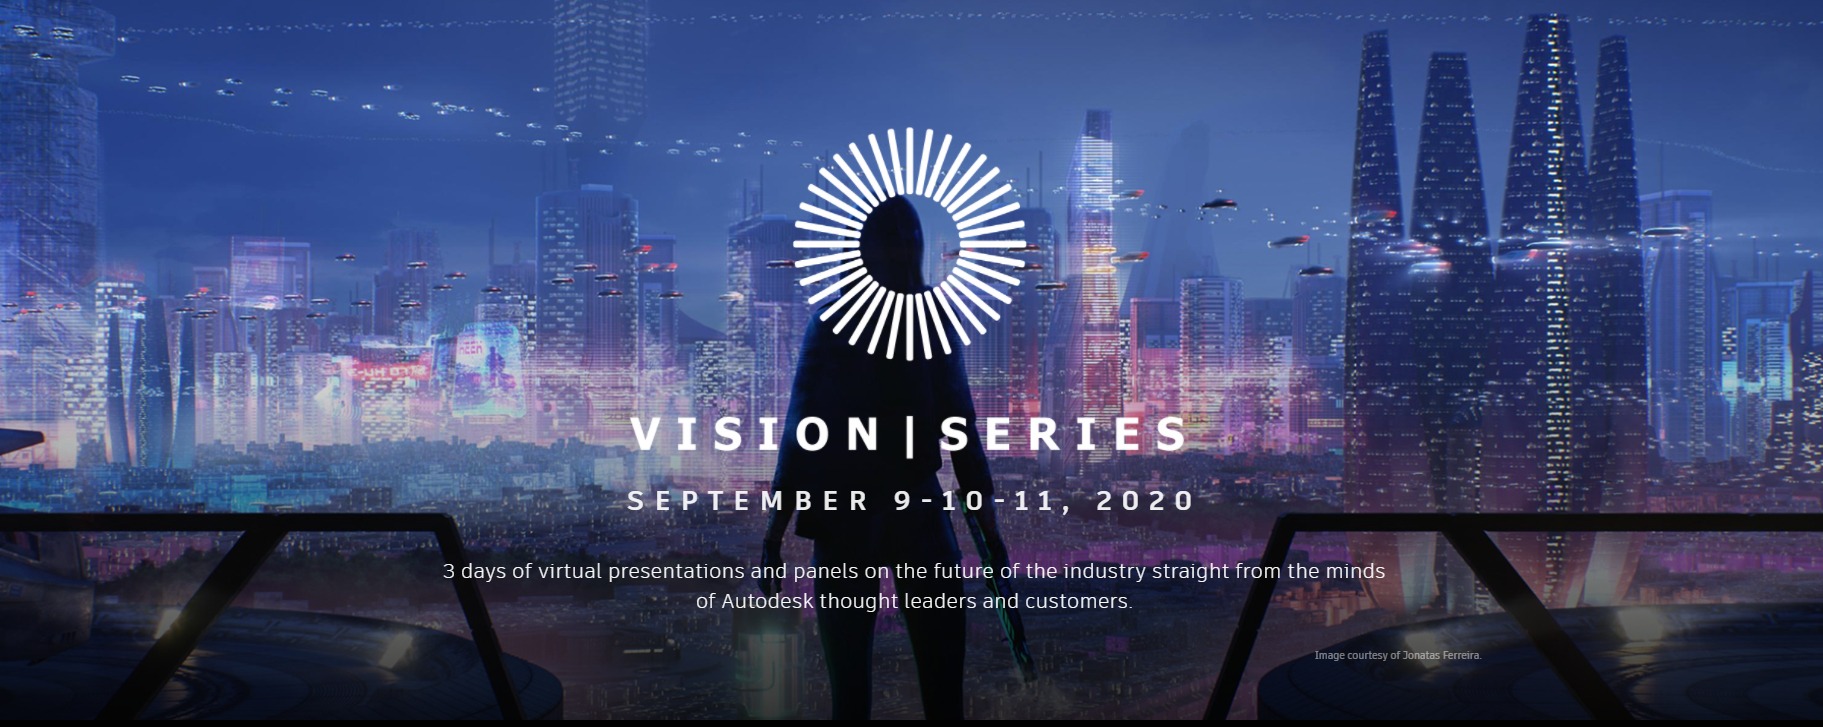 Autodesk-Vision-Series-2020